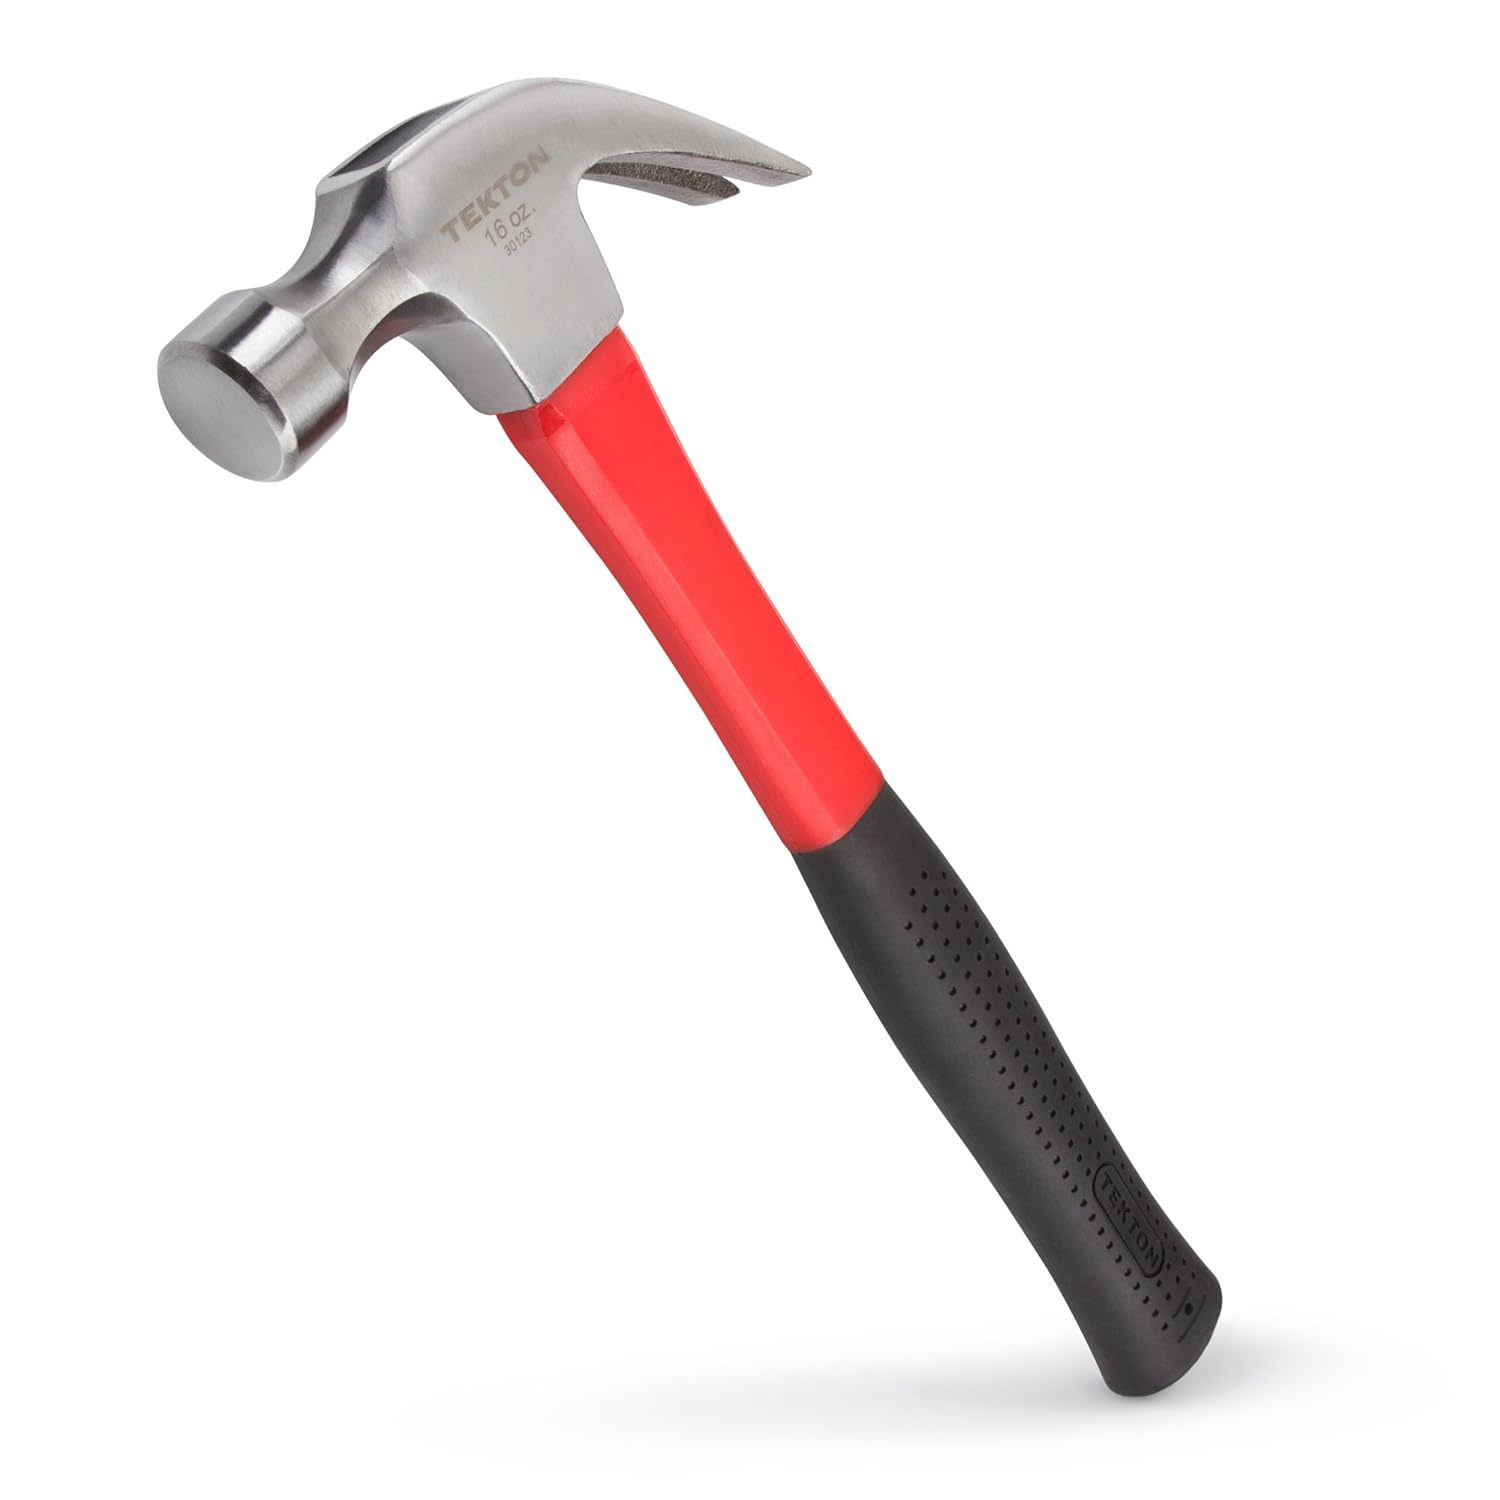 TEKTON 16 oz. Jacketed Fiberglass Claw Hammer | 30123 - $26.99